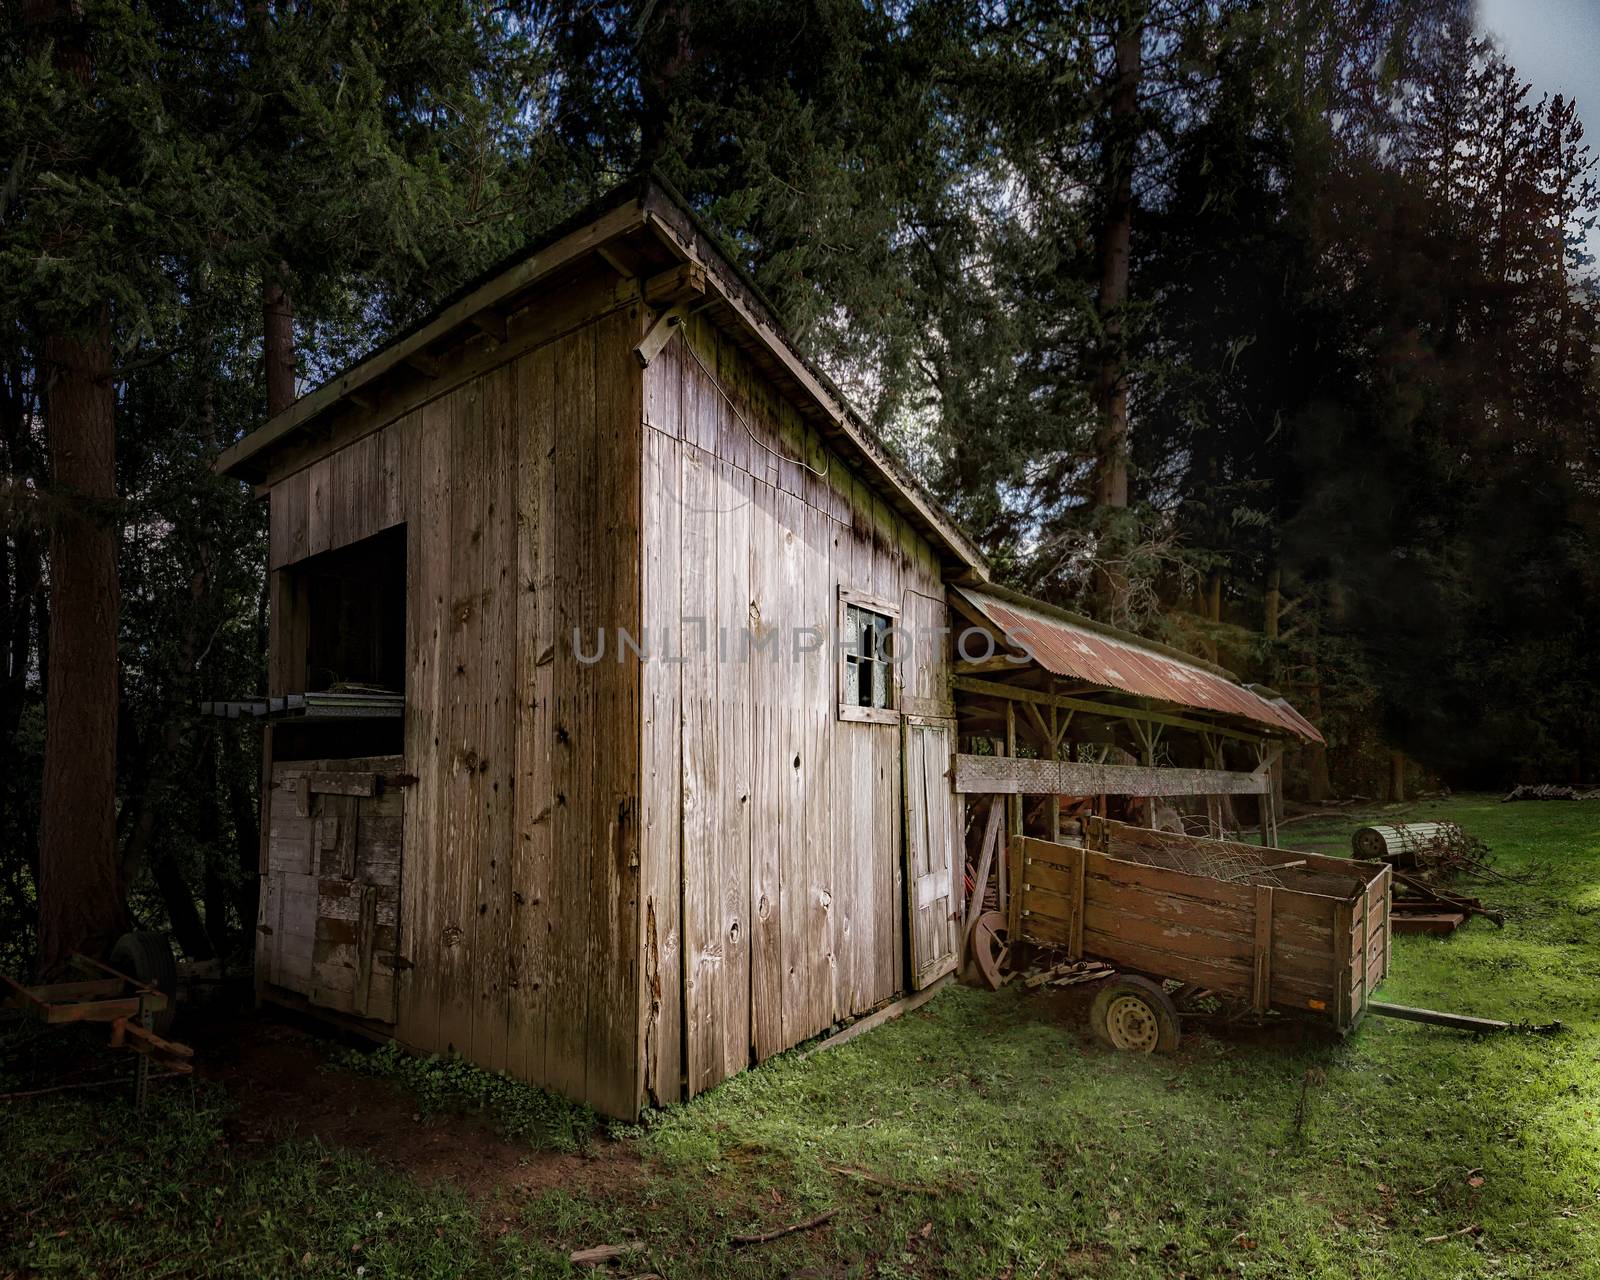 Small Barn on a Family Farm by backyard_photography